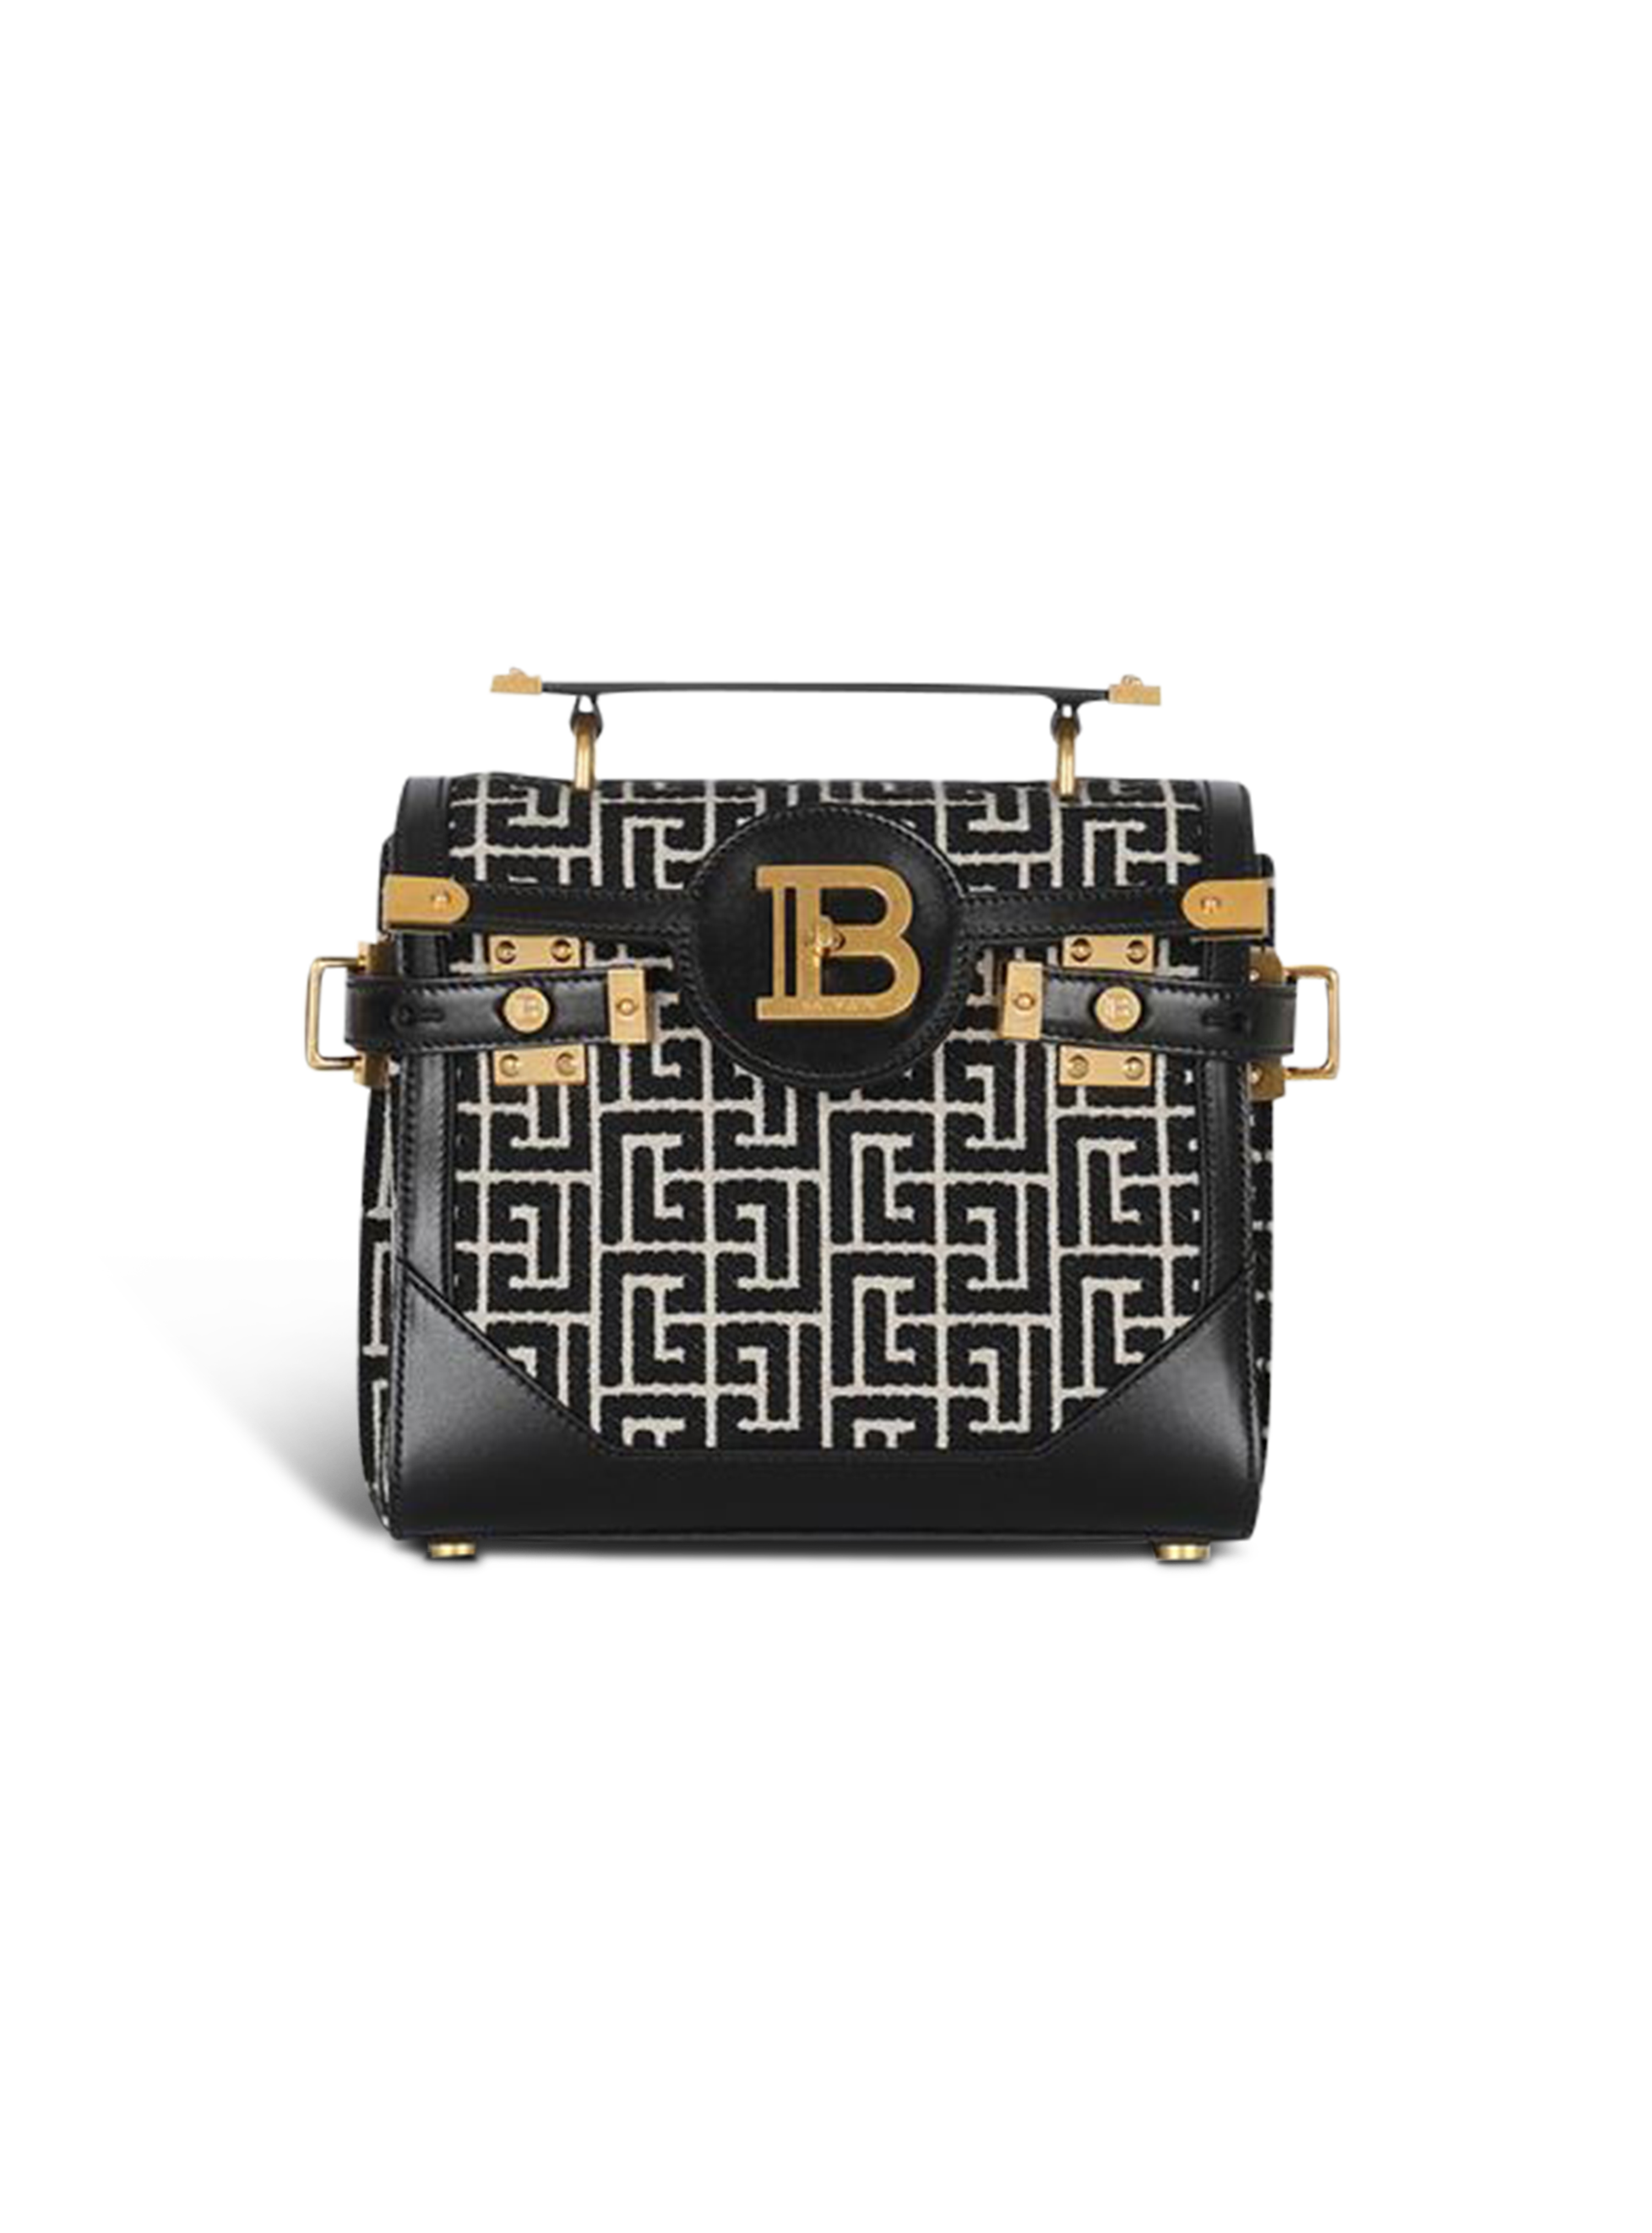 Bicolor jacquard B-Buzz 23 bag with black leather panel, black